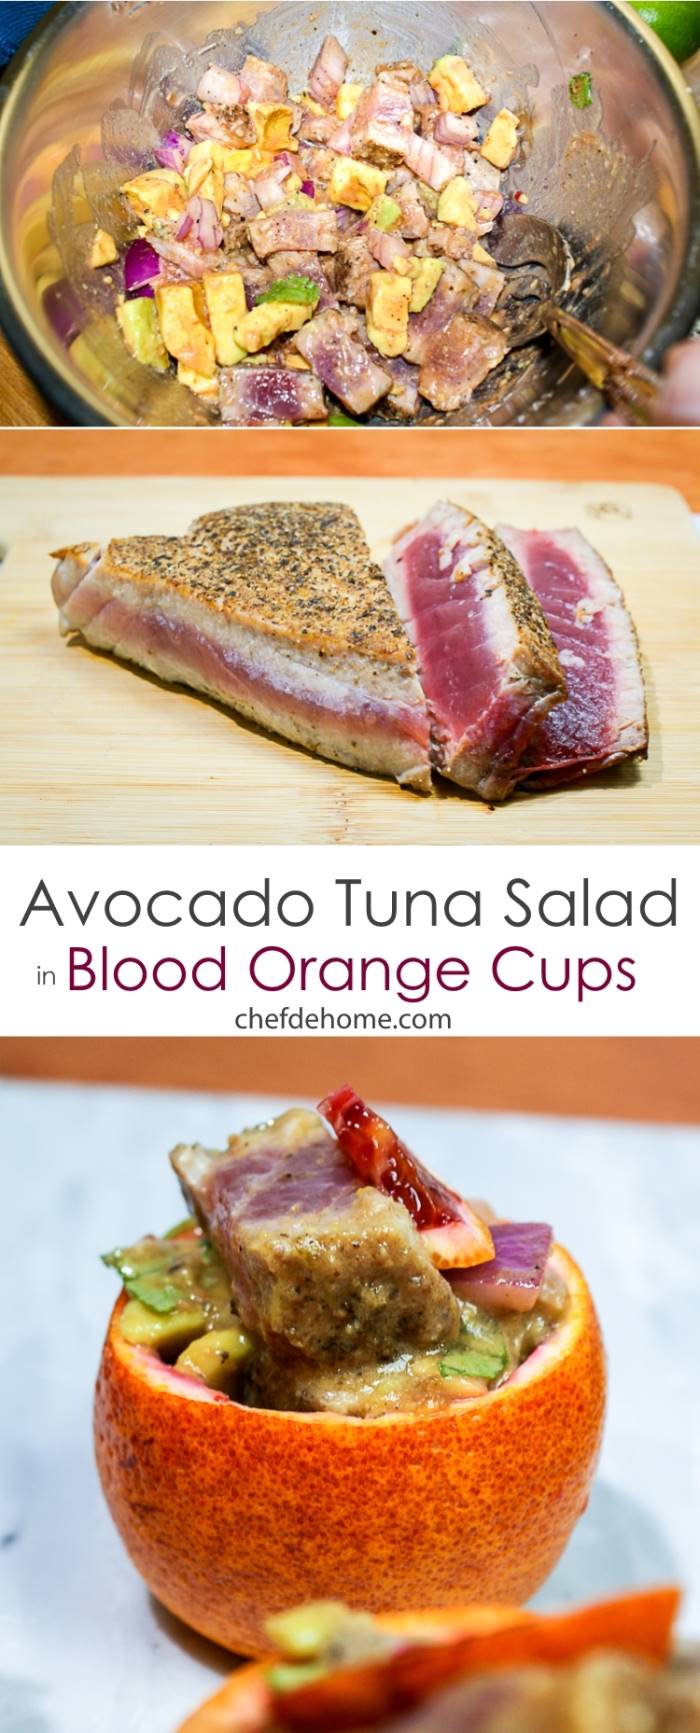 Lite and Healthy Tuna Avocado Salad | chefdehome.com